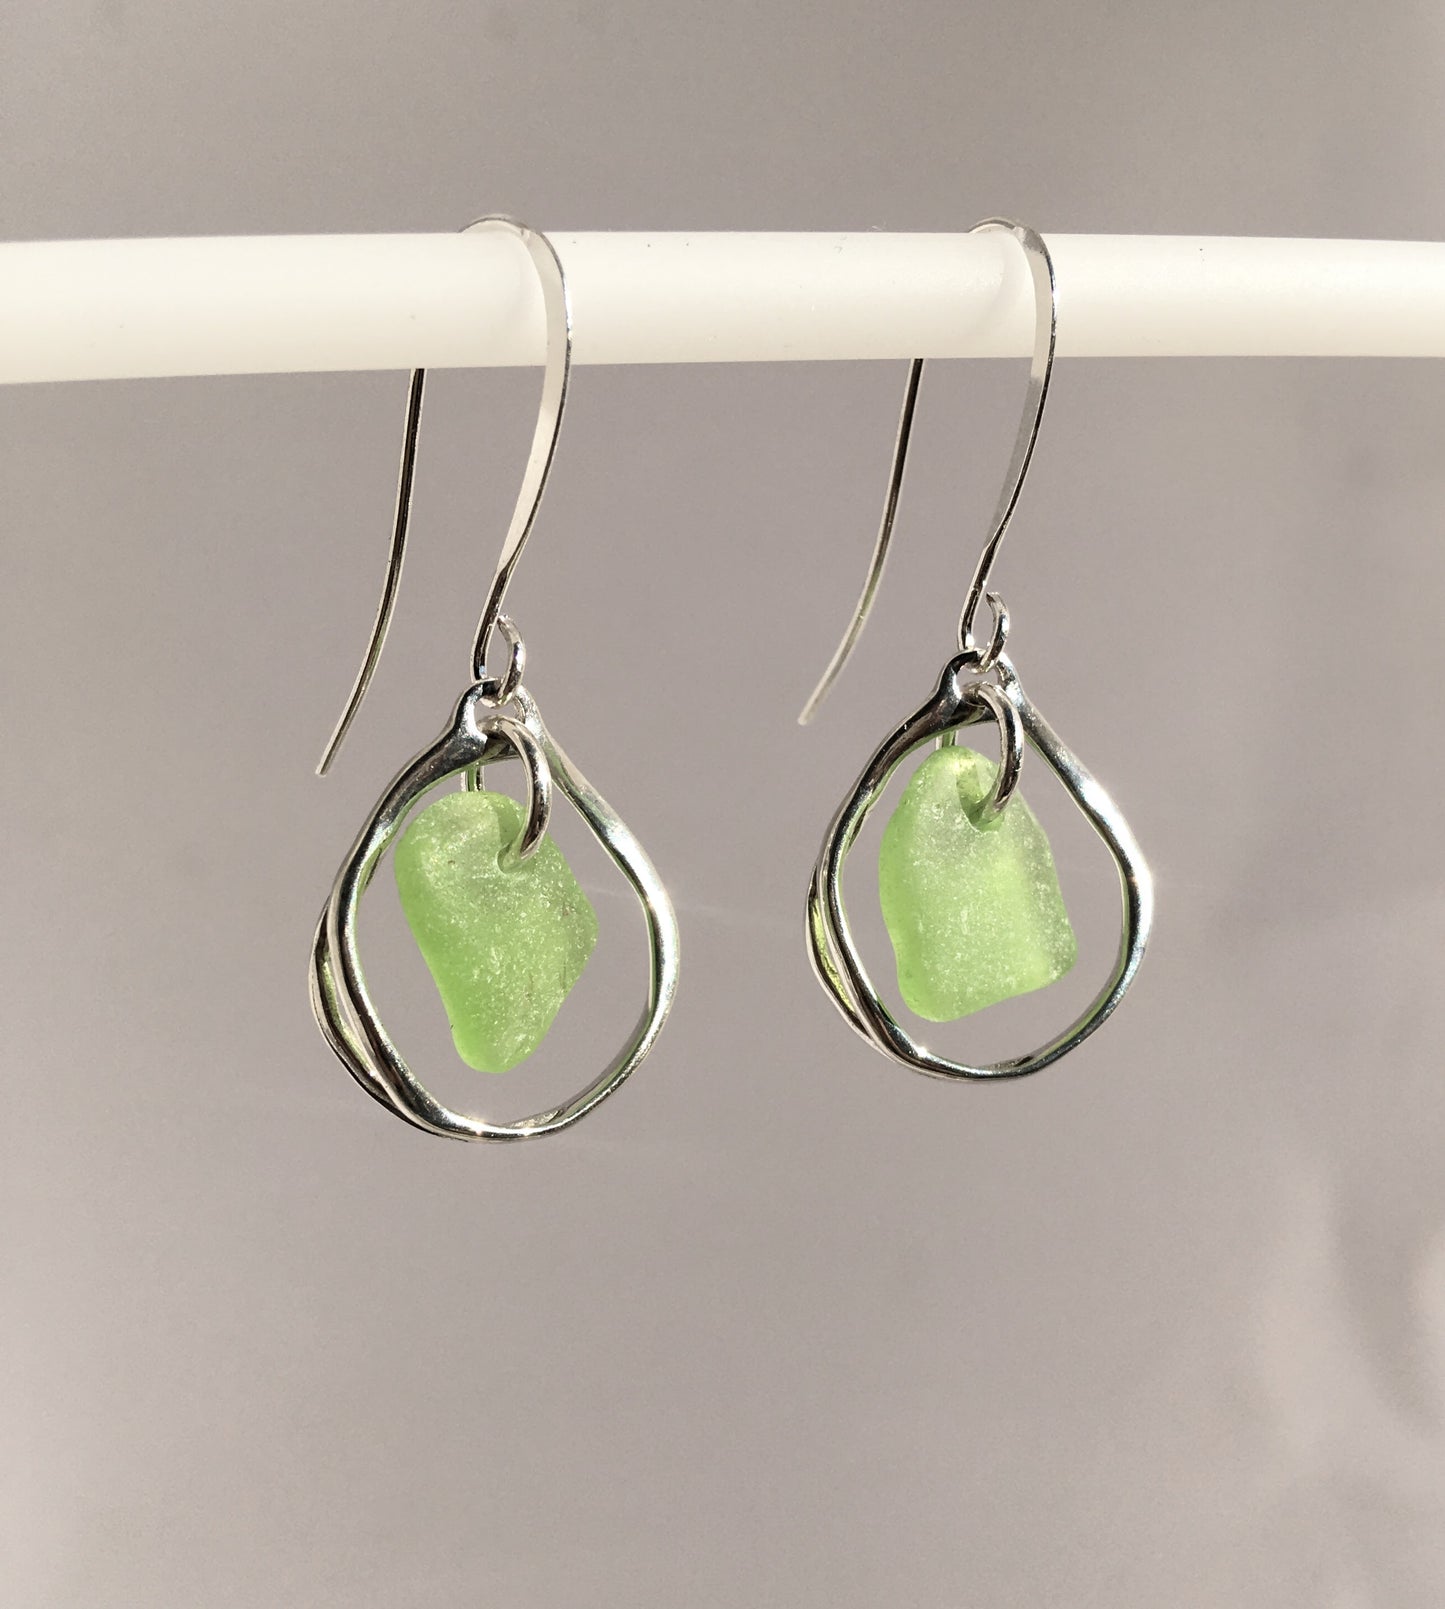 Heaven on Earth Earrings - Green Sea Glass from Cape Breton, Nova Scotia, Canada and Sterling Silver